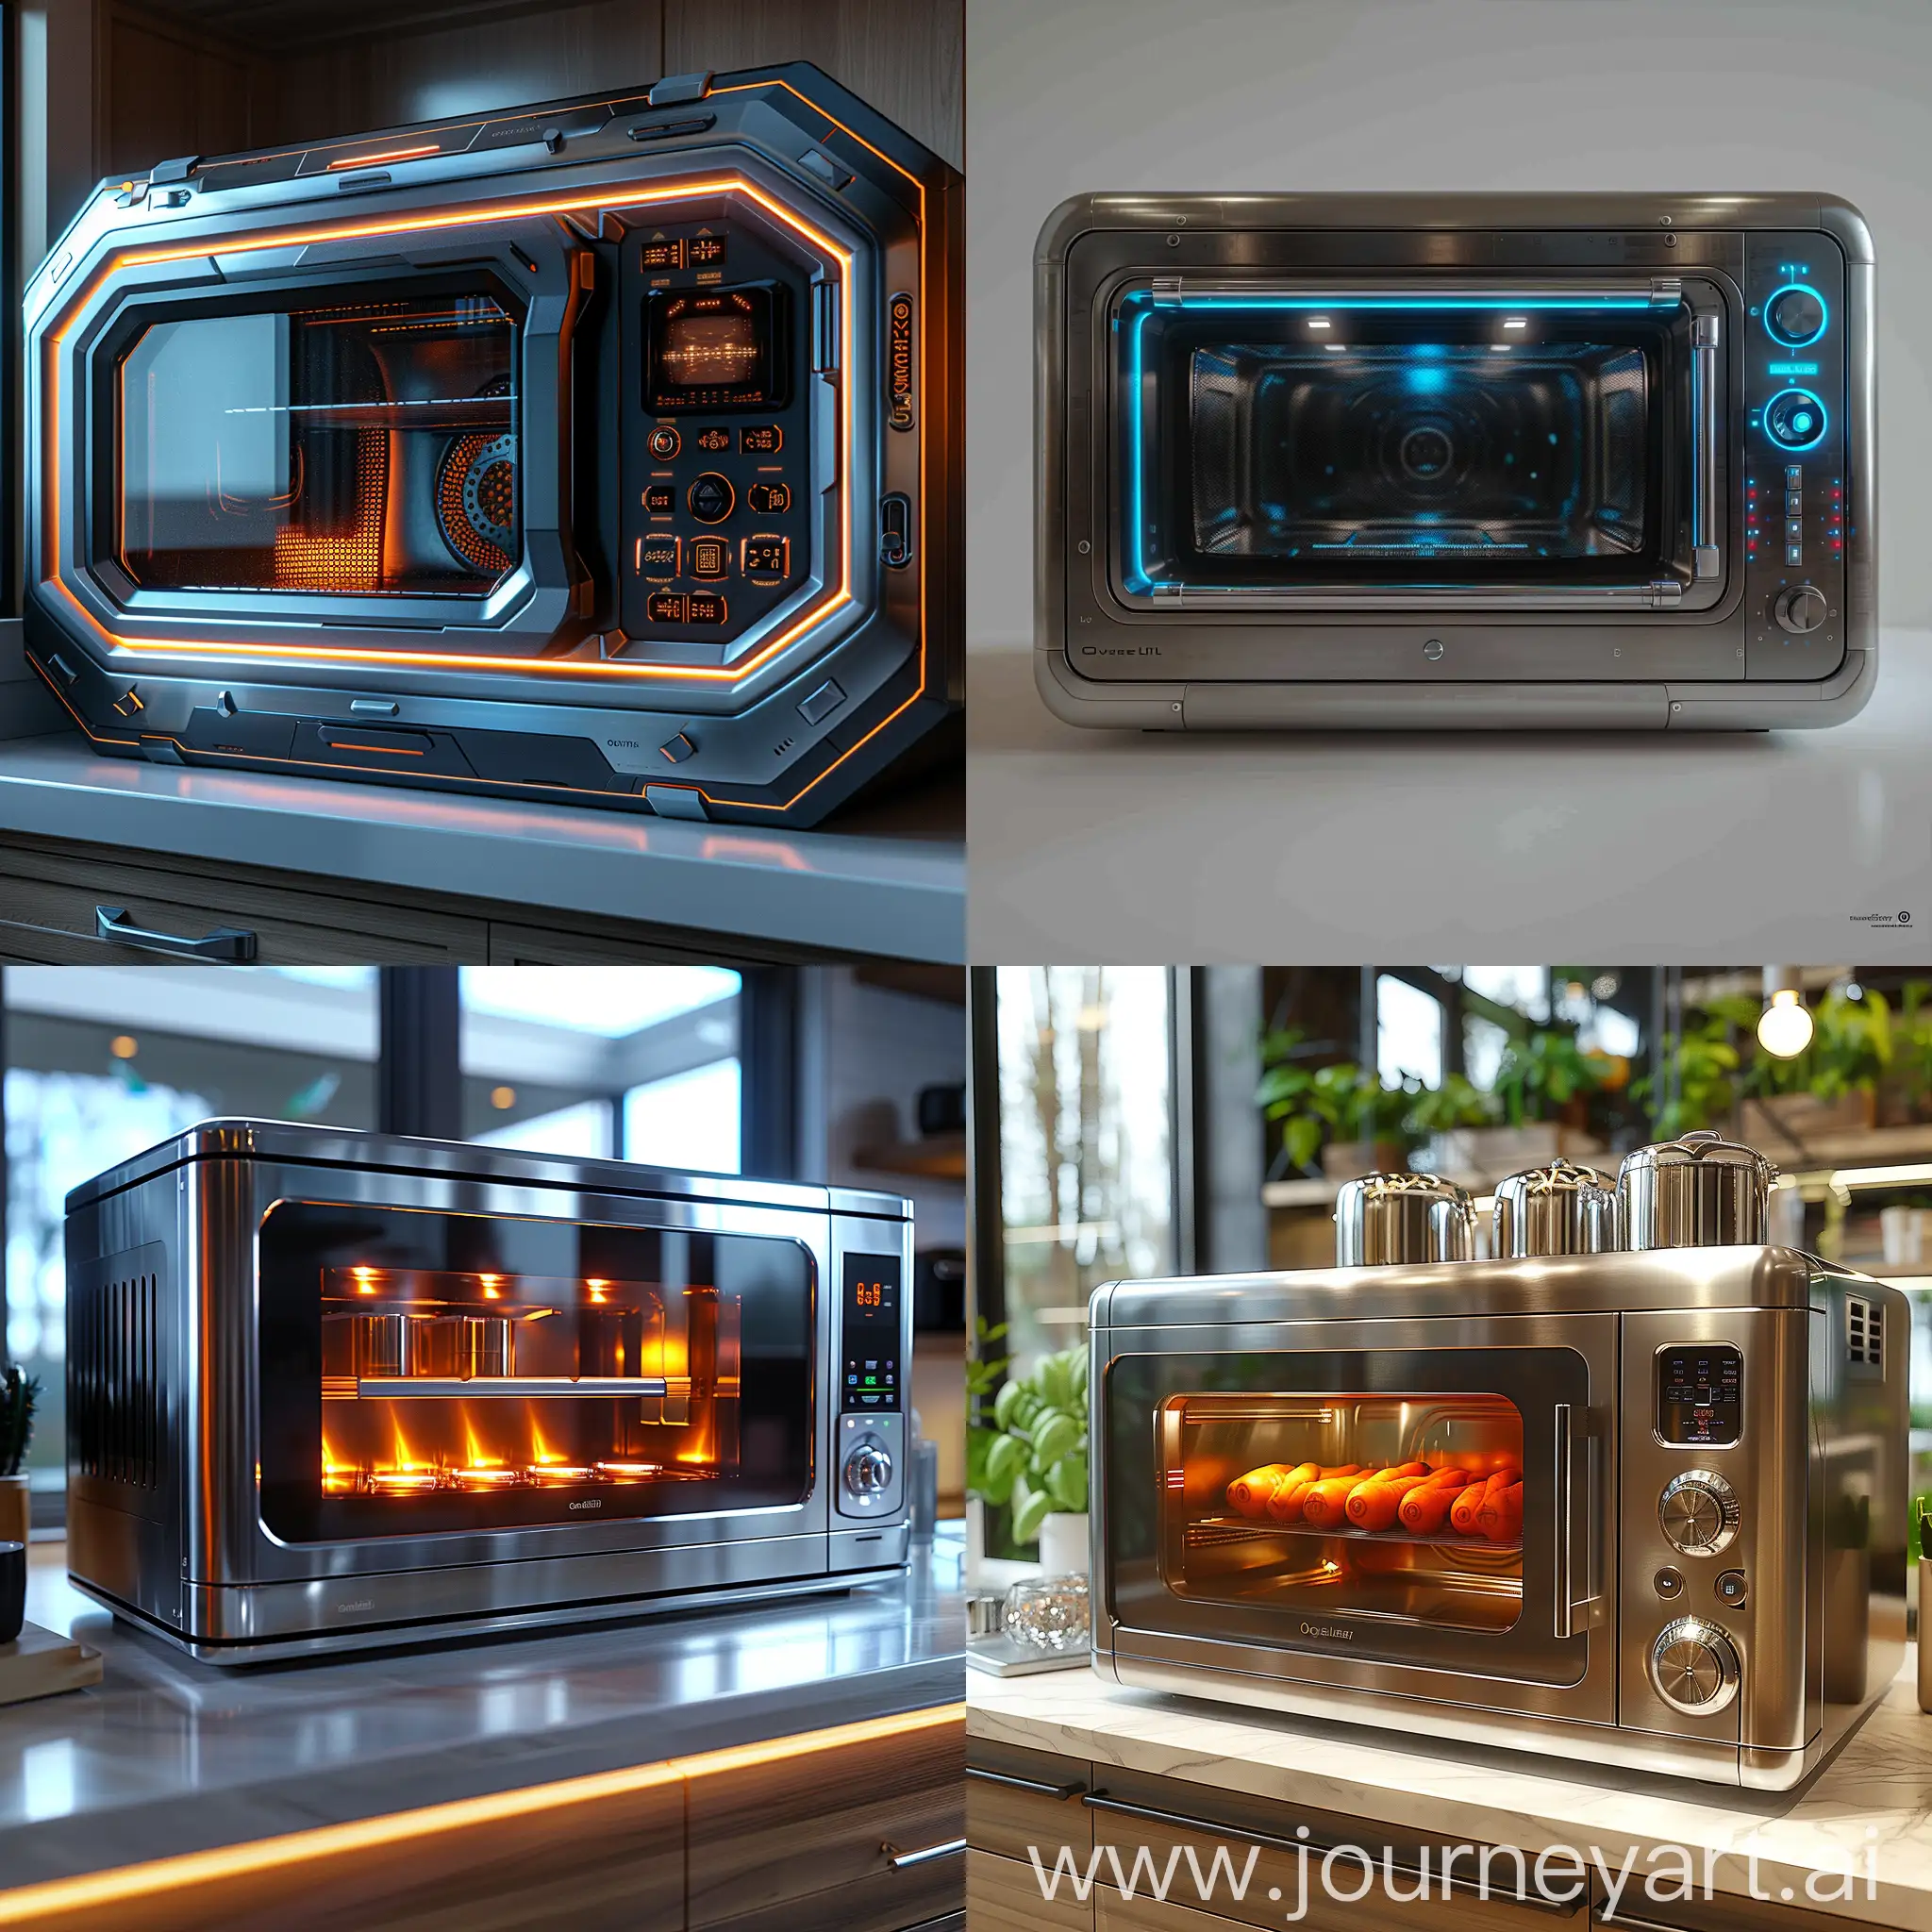 Futuristic-UltraModern-Microwave-with-HighTech-Design